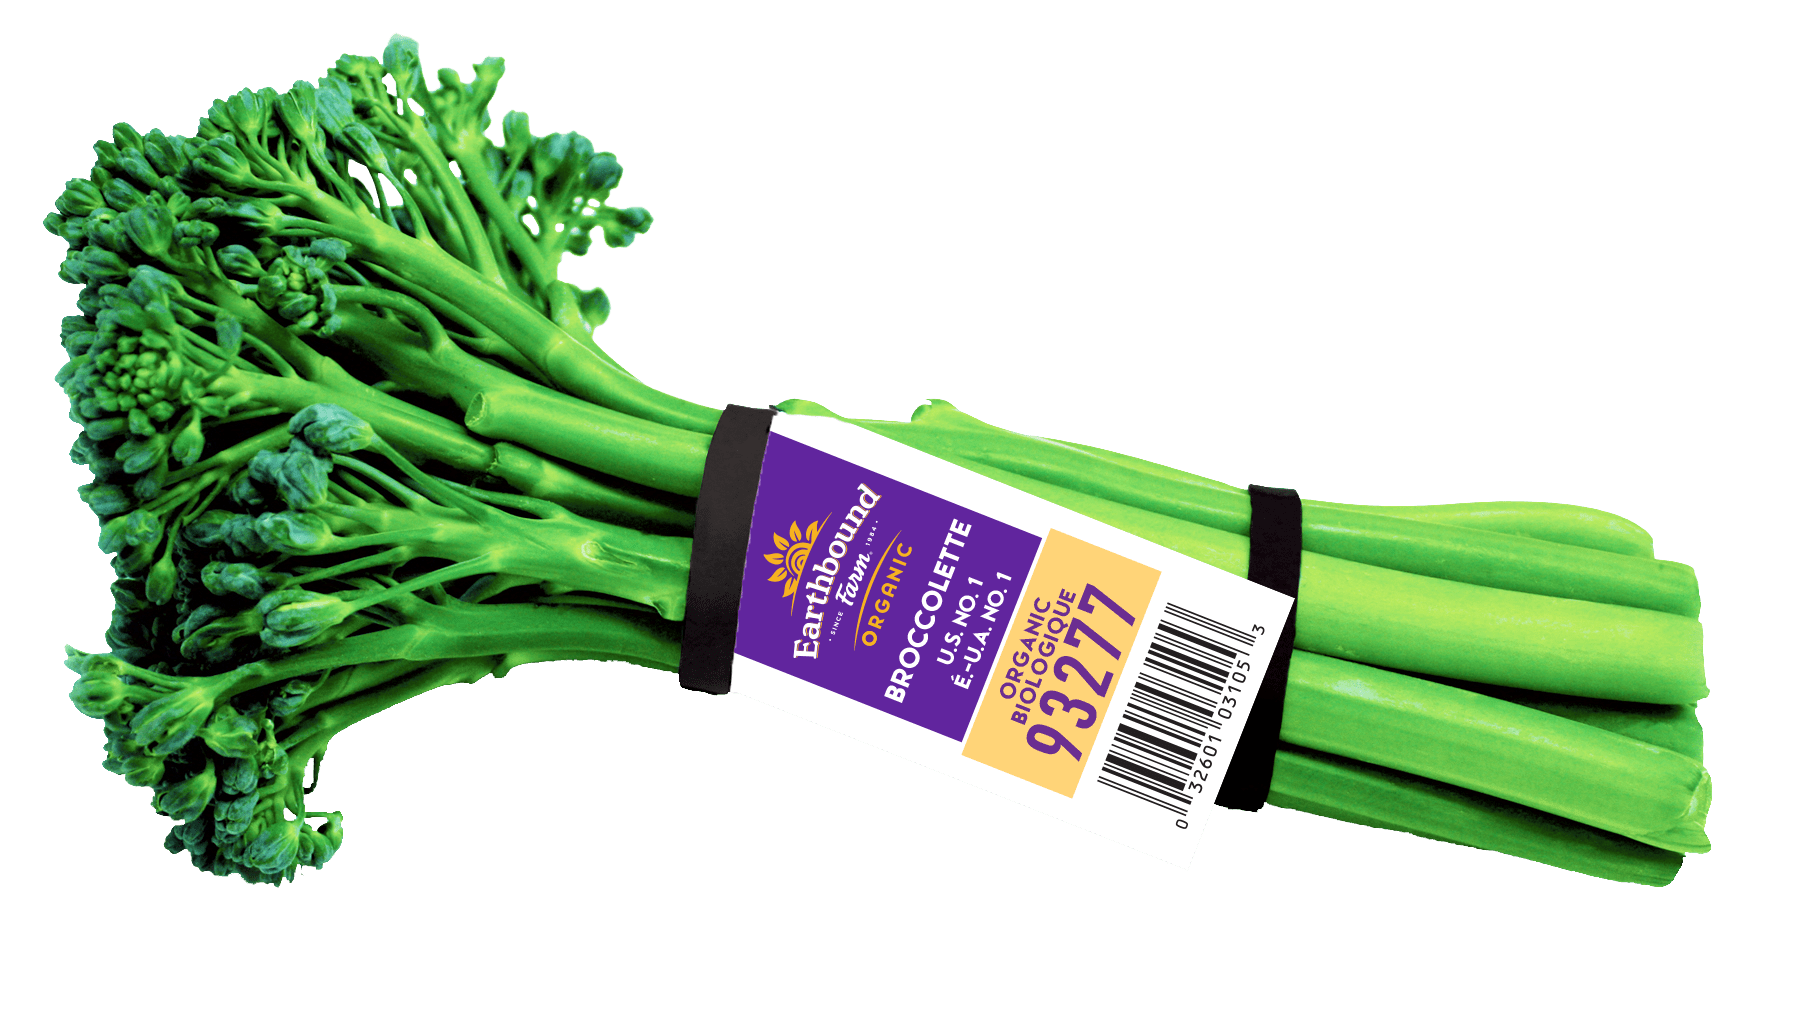 Organic Broccolette